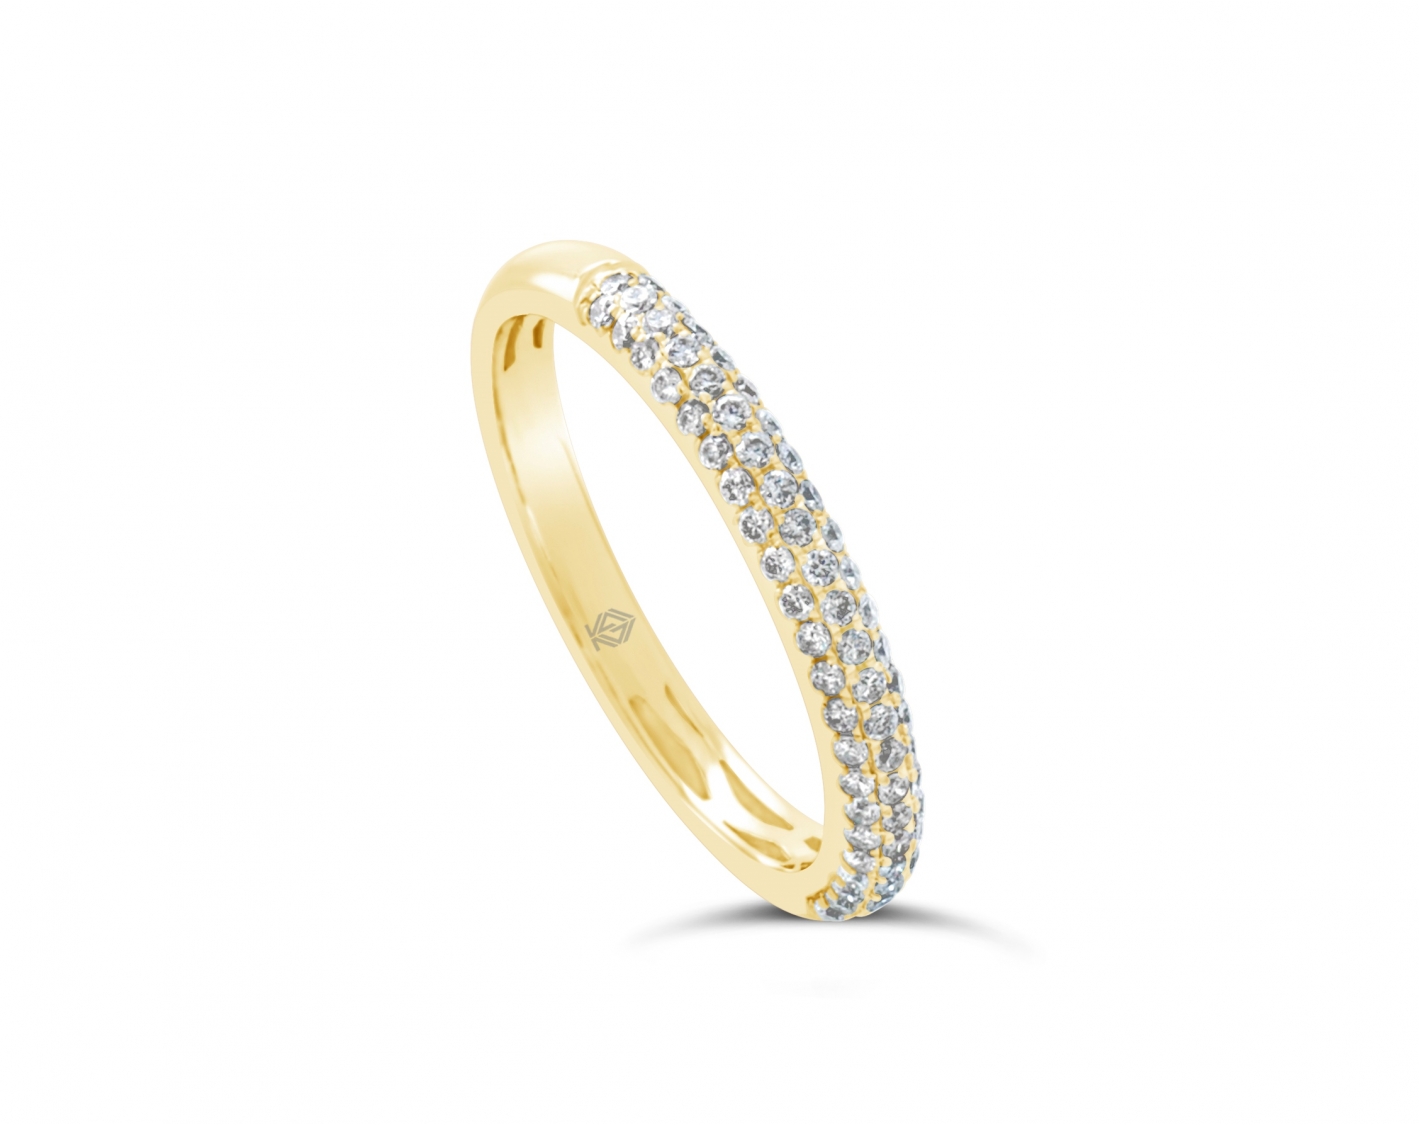 18k yellow gold 3-row bombay half eternity round shaped diamond wedding ring Photos & images